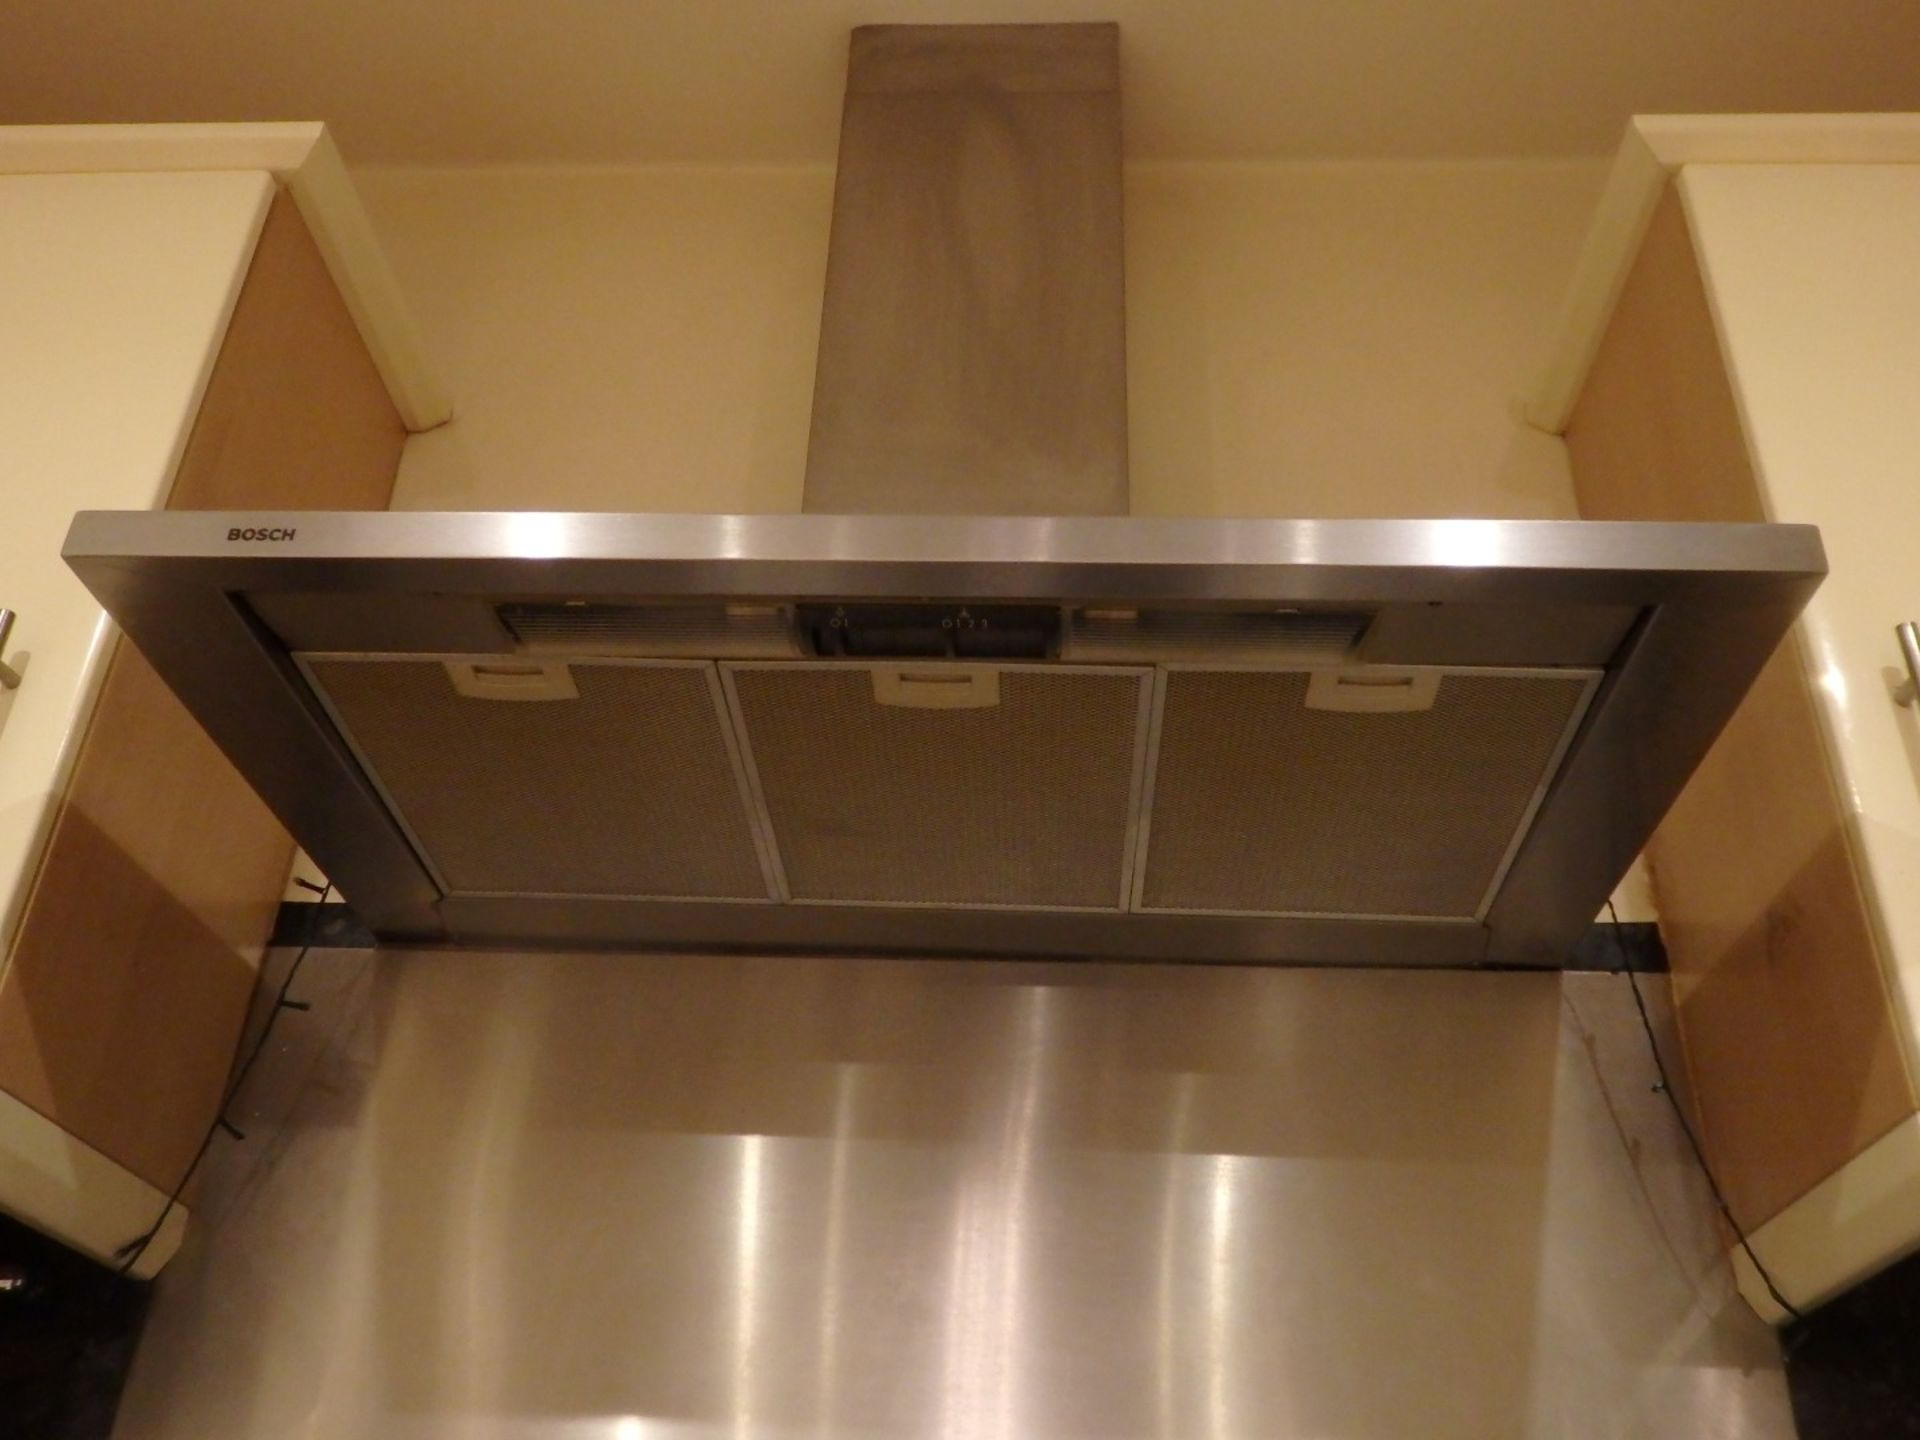 1 x Hygena Fitted Kitchen - Cream Gloss Doors With T Bar Handles - Black Granite Worktops - Bosch - Image 29 of 77